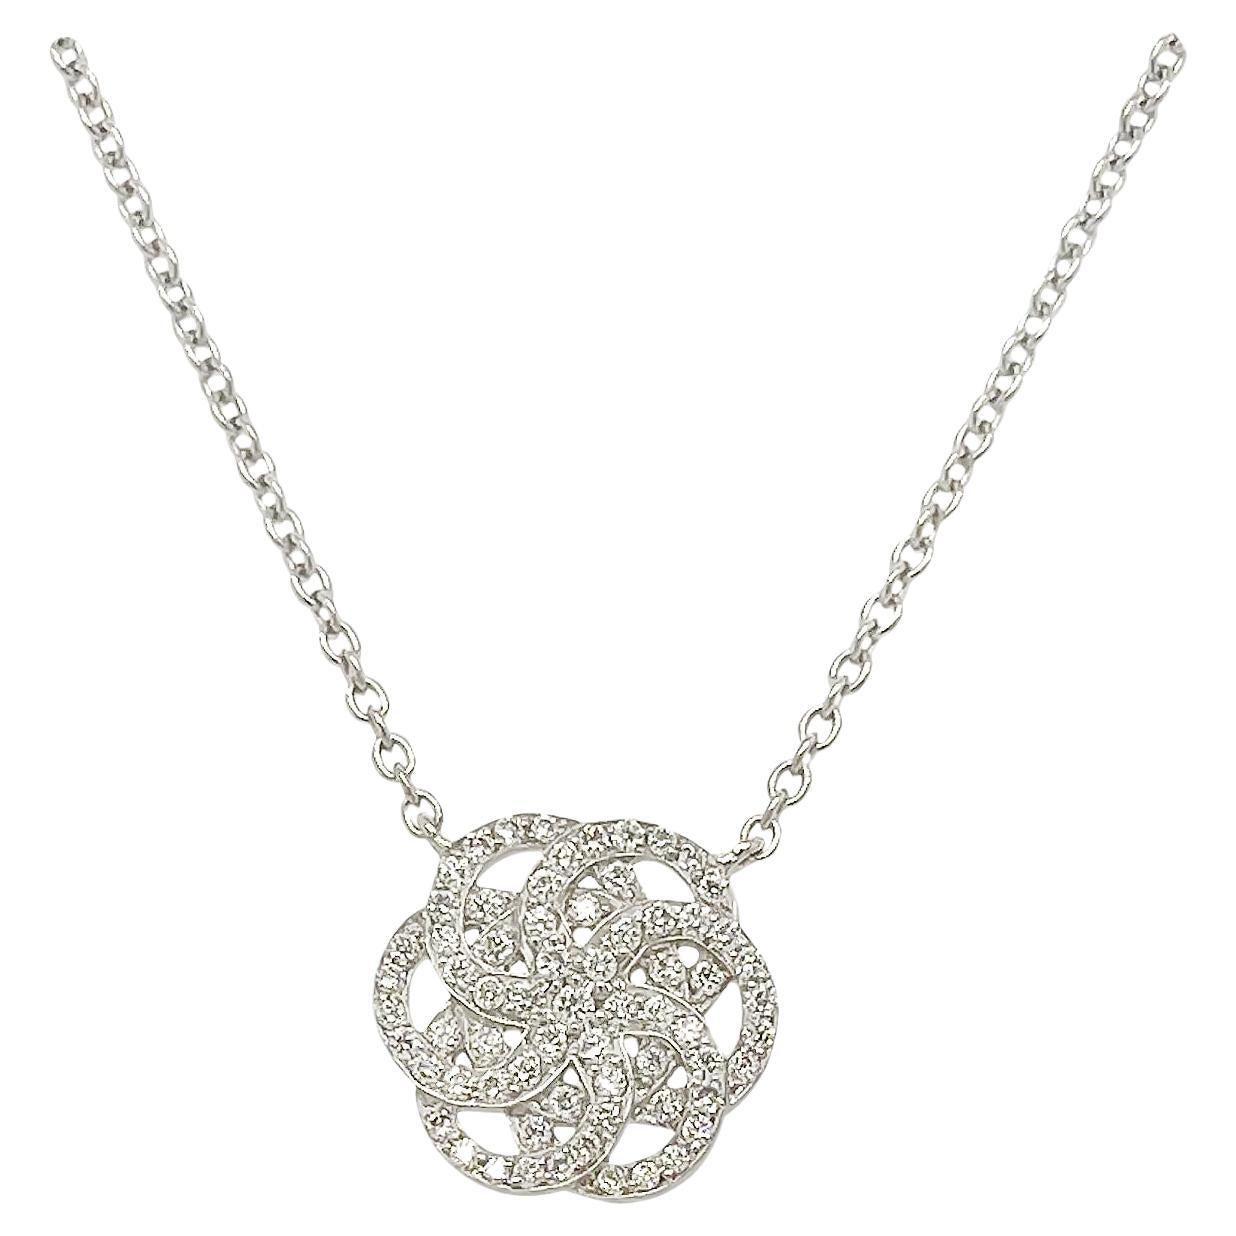 Pave Set Diamond Flower of Life Pendant in 18k White Gold